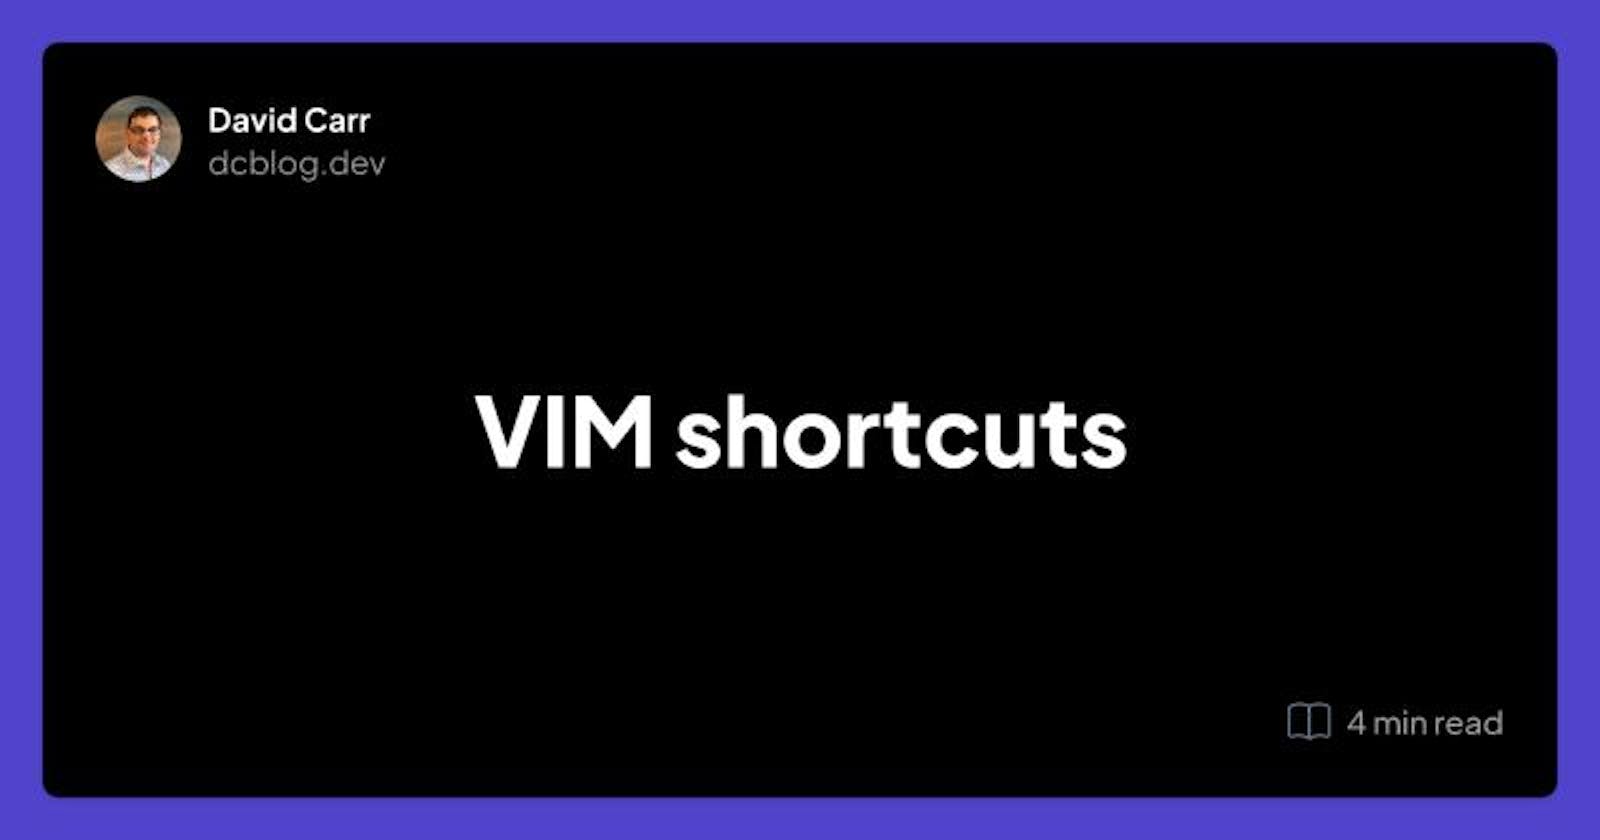 VIM shortcuts